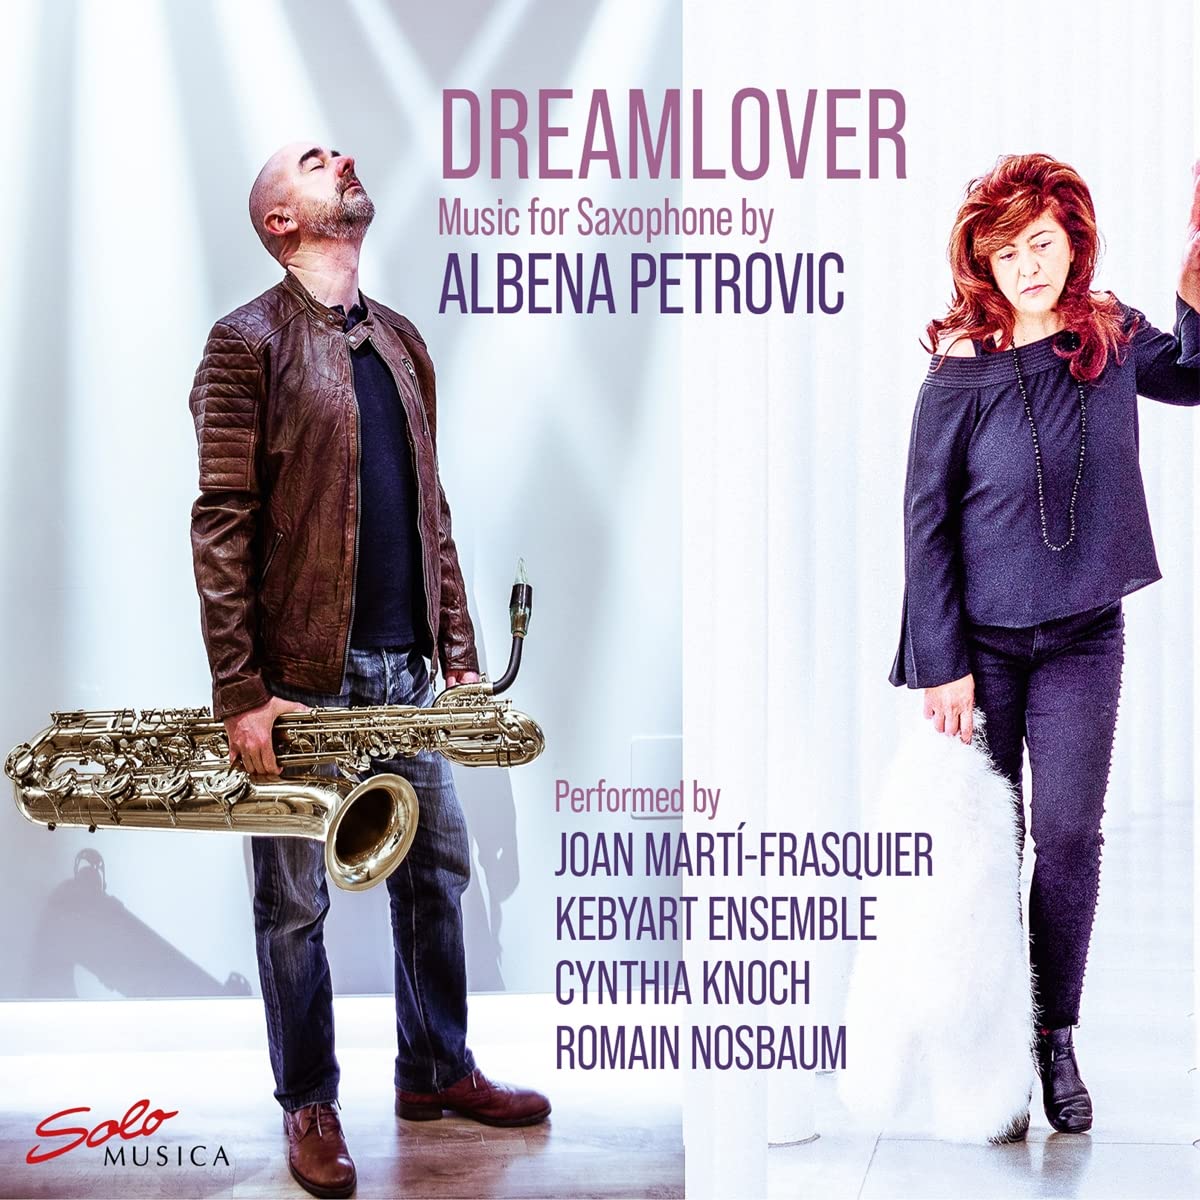 CD-Tipp: Dreamlover, Music for Saxophone by Albena Petrovic,  klassik-begeistert.de